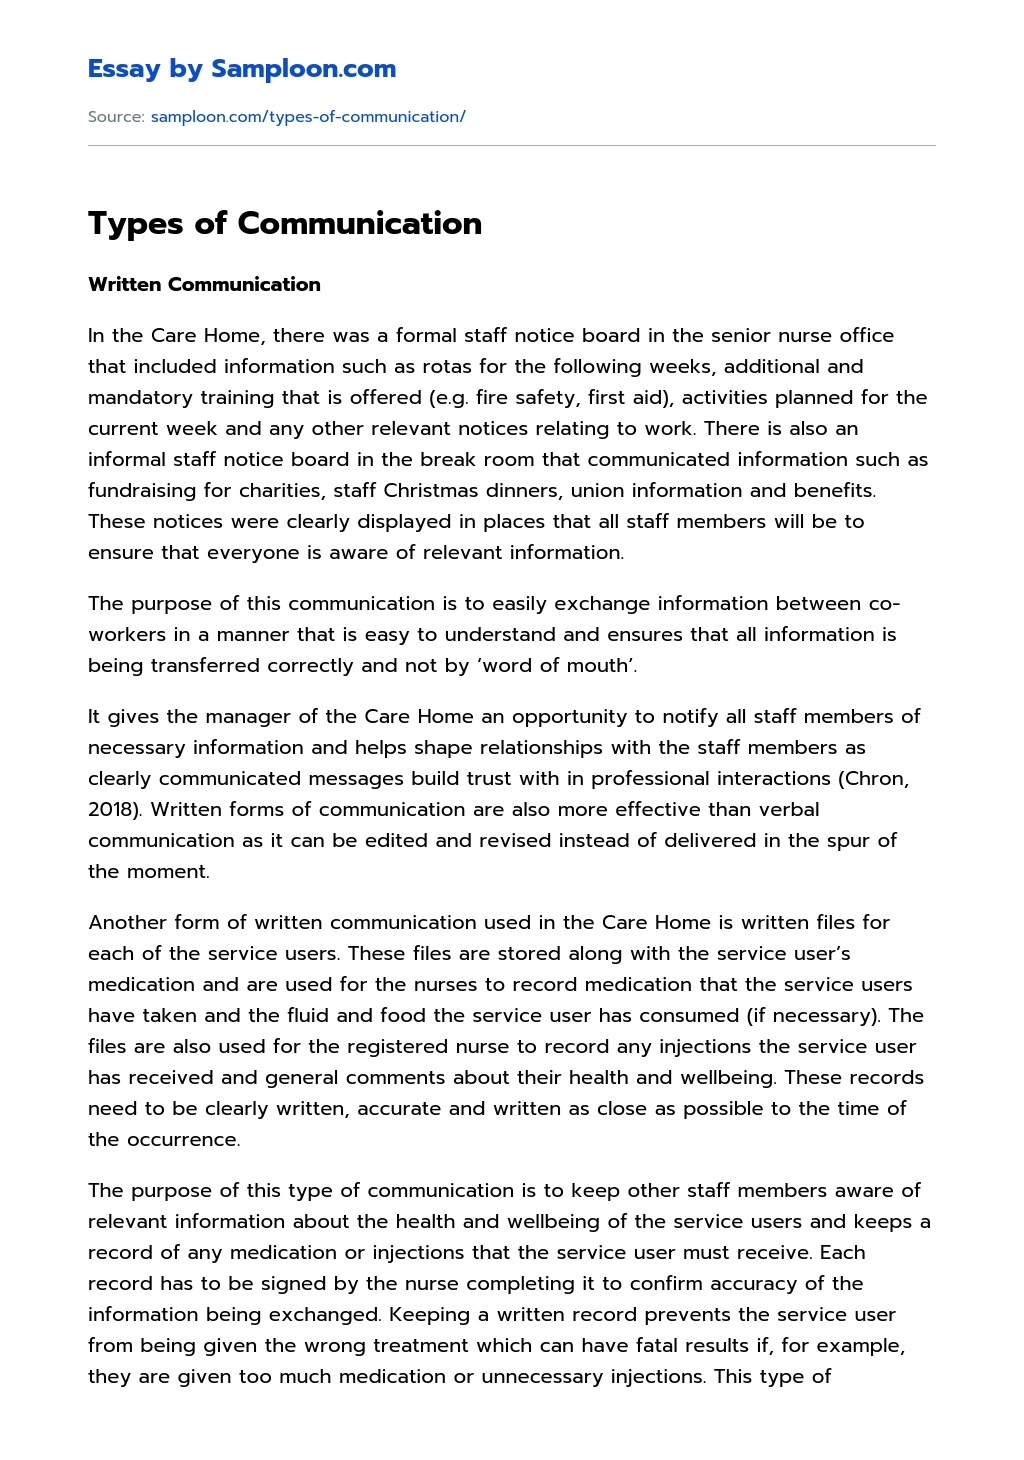 Types of Communication essay